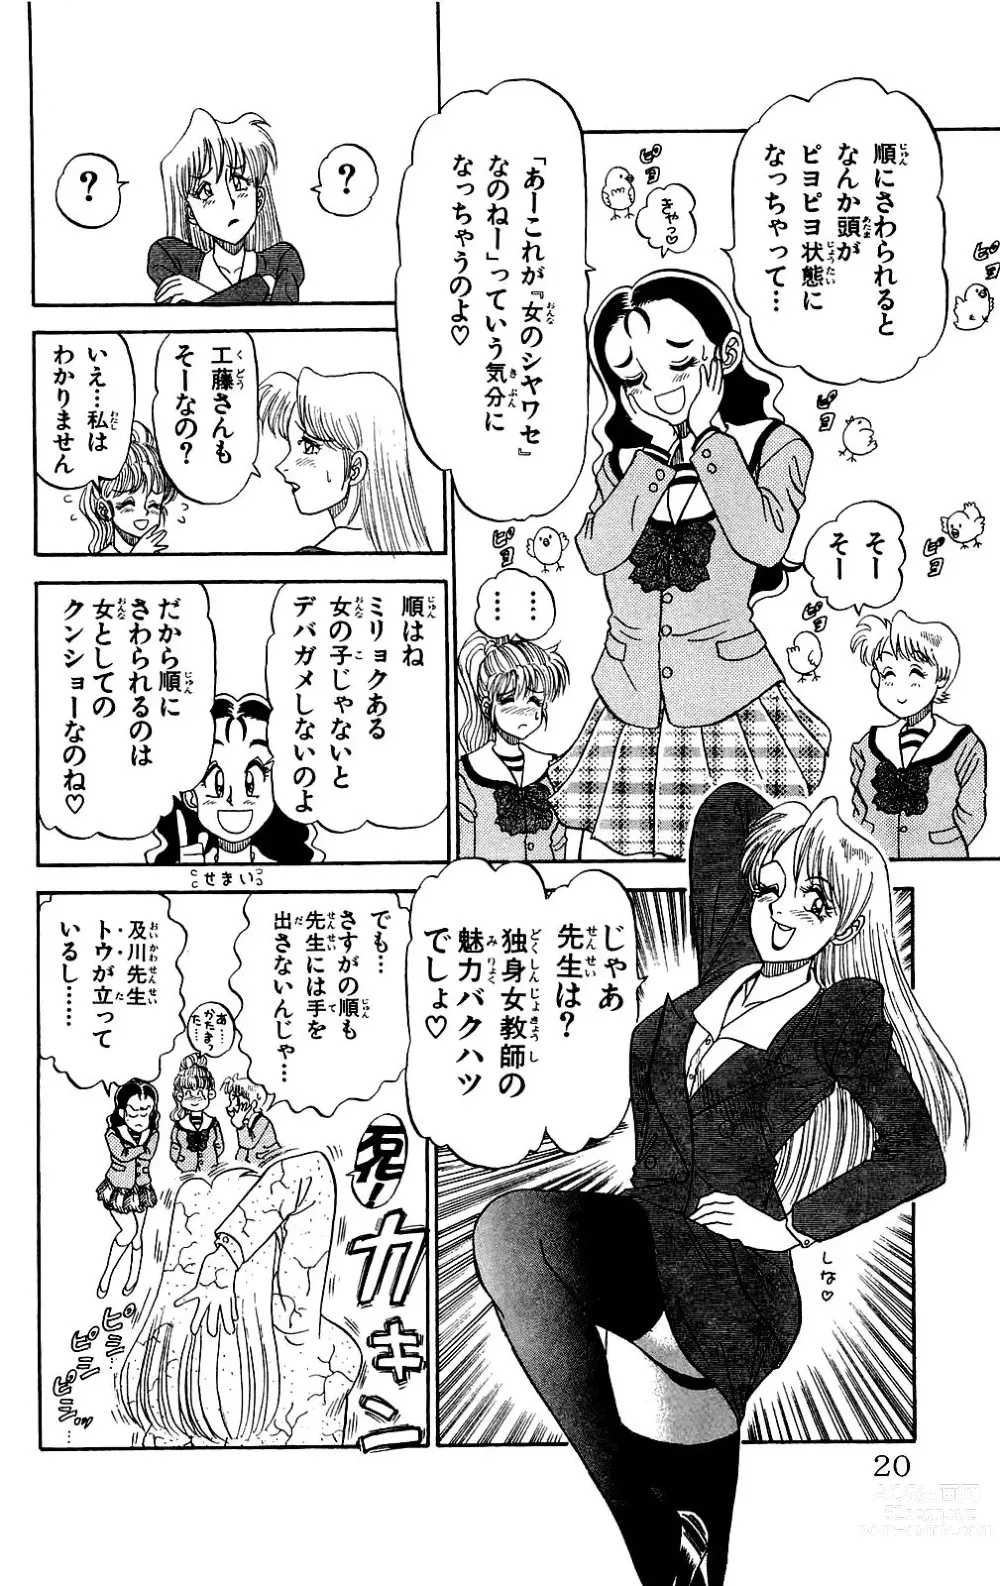 Page 18 of manga Orette Piyoritan Vol. 1